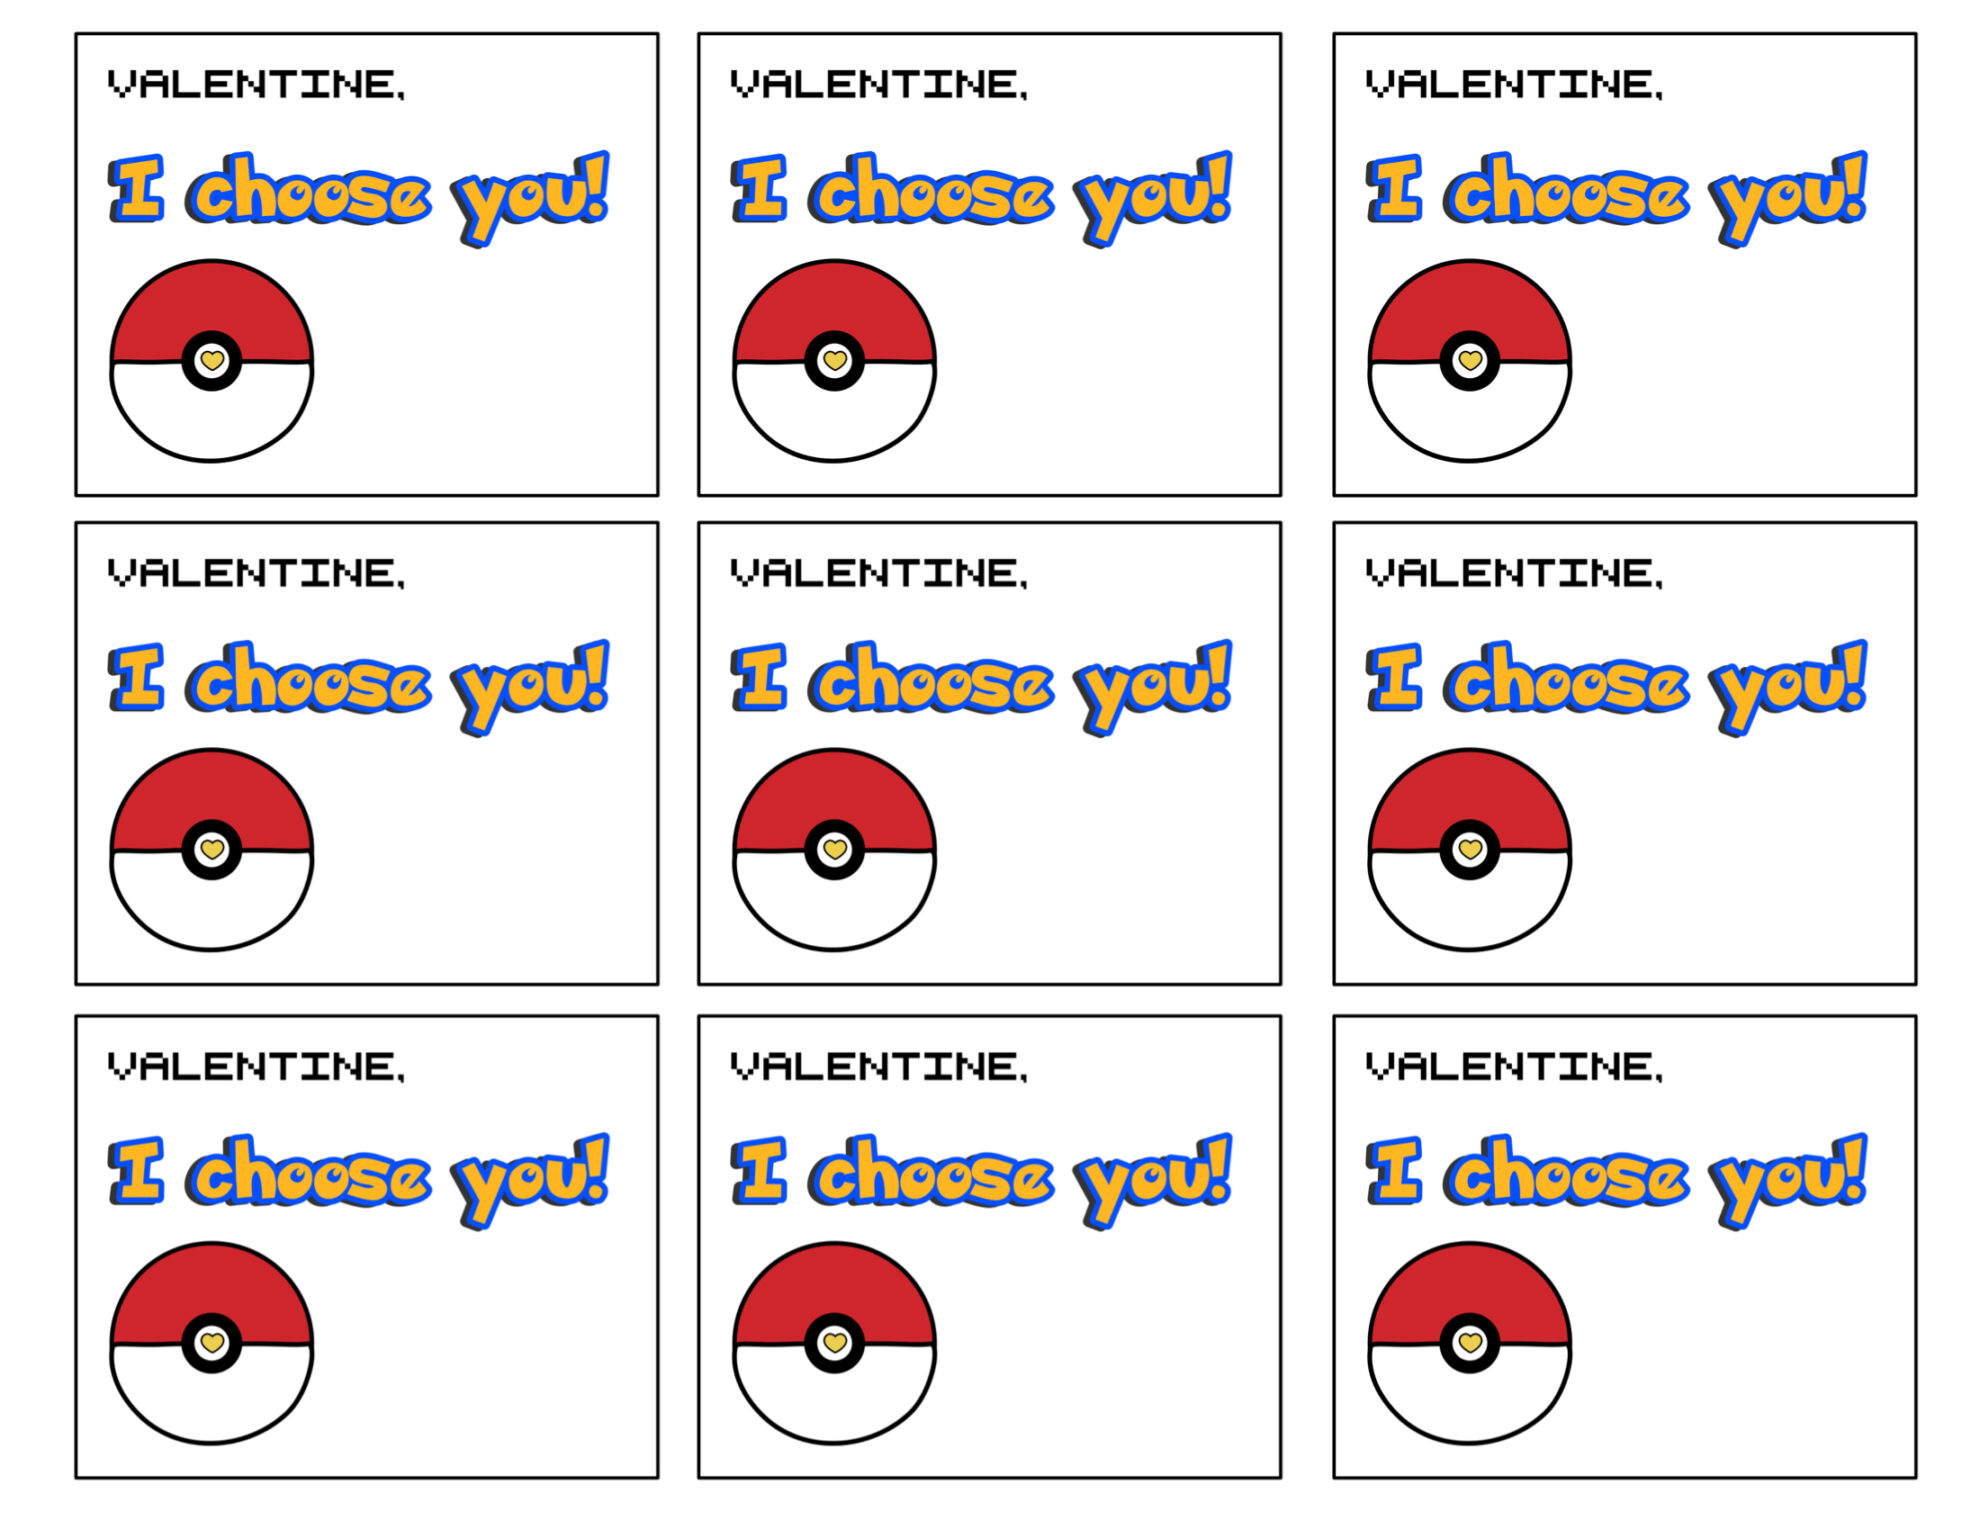 Free Printable Pokémon Valentine Cards Paper Trail Design